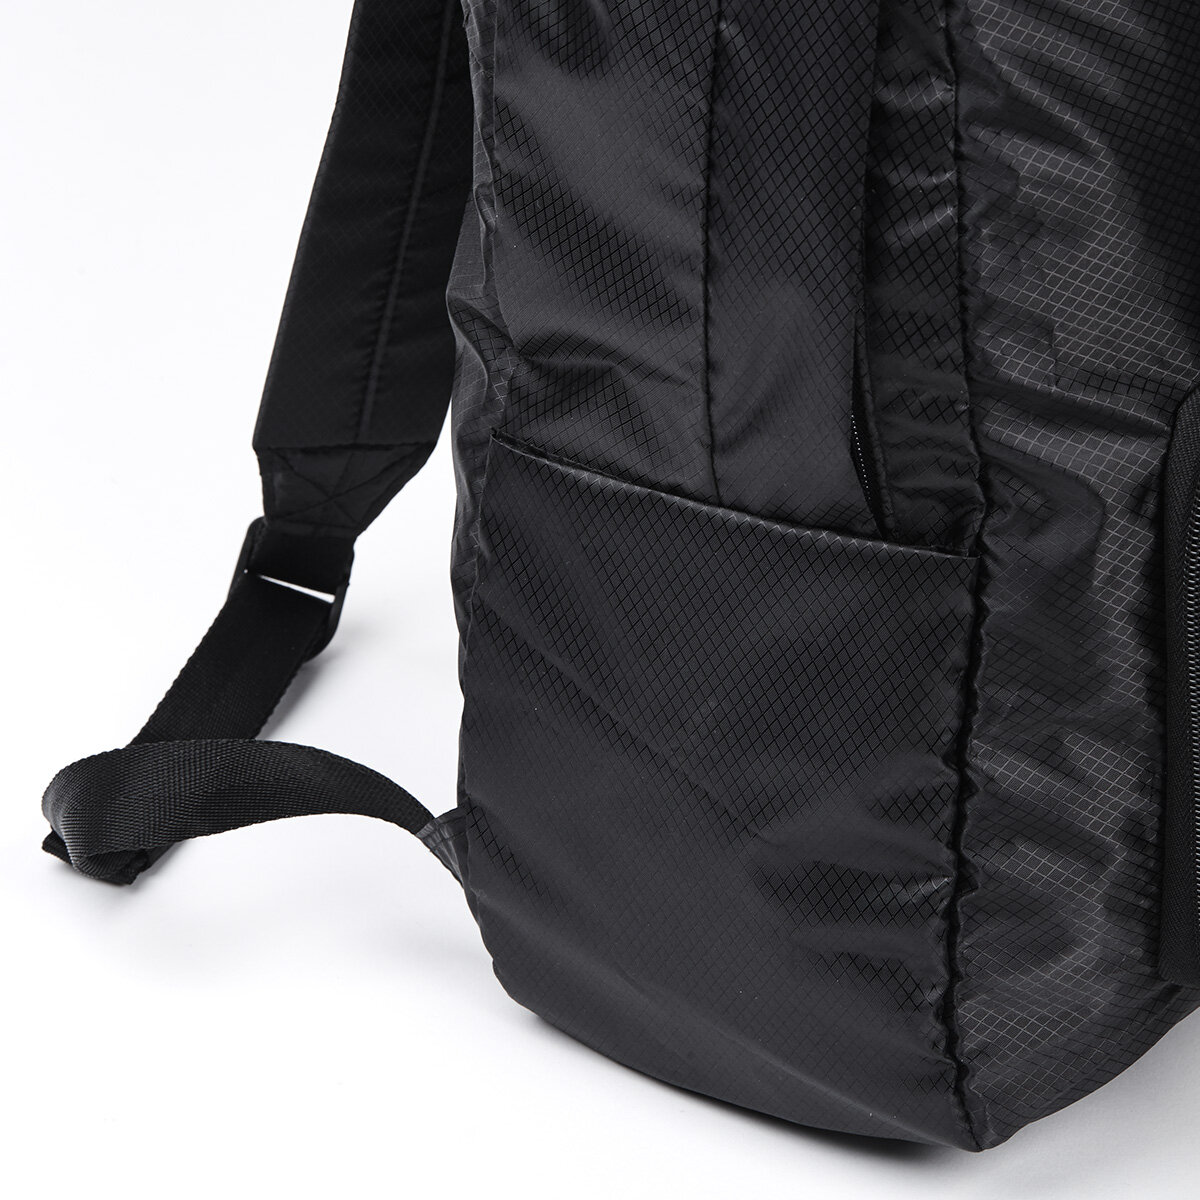 Plecak Lexon LN2311NN Packable czarny widok na kieszeń z boku plecaka